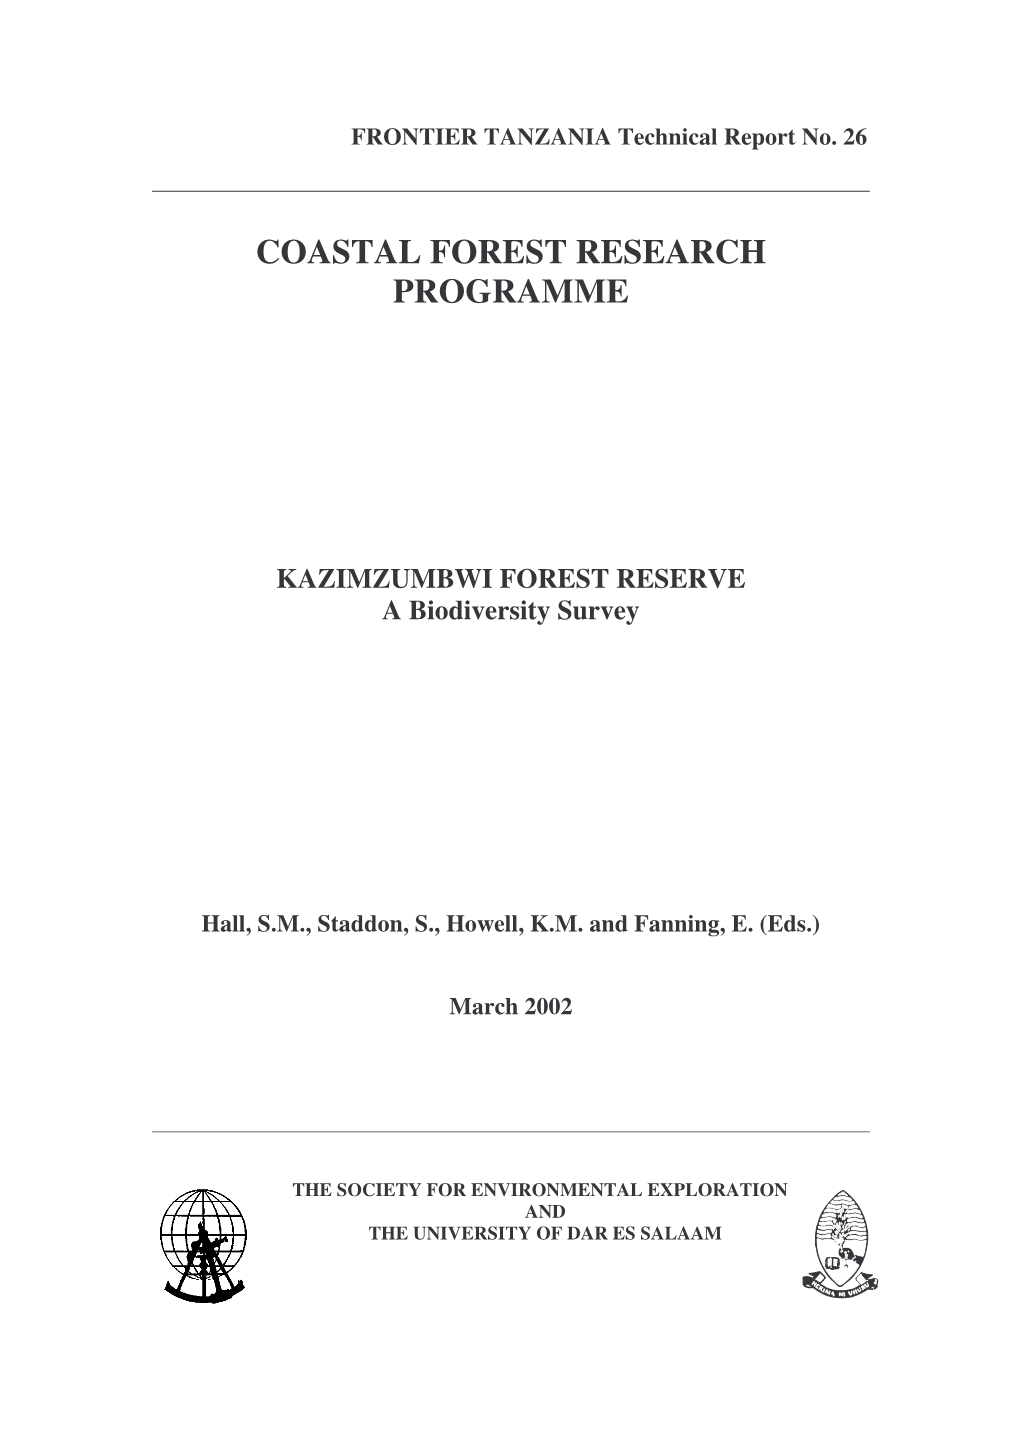 Kazimzumbwi Forest Reserve: a Biodiversity Survey. Coastal Forest Research Programme Technical Report No